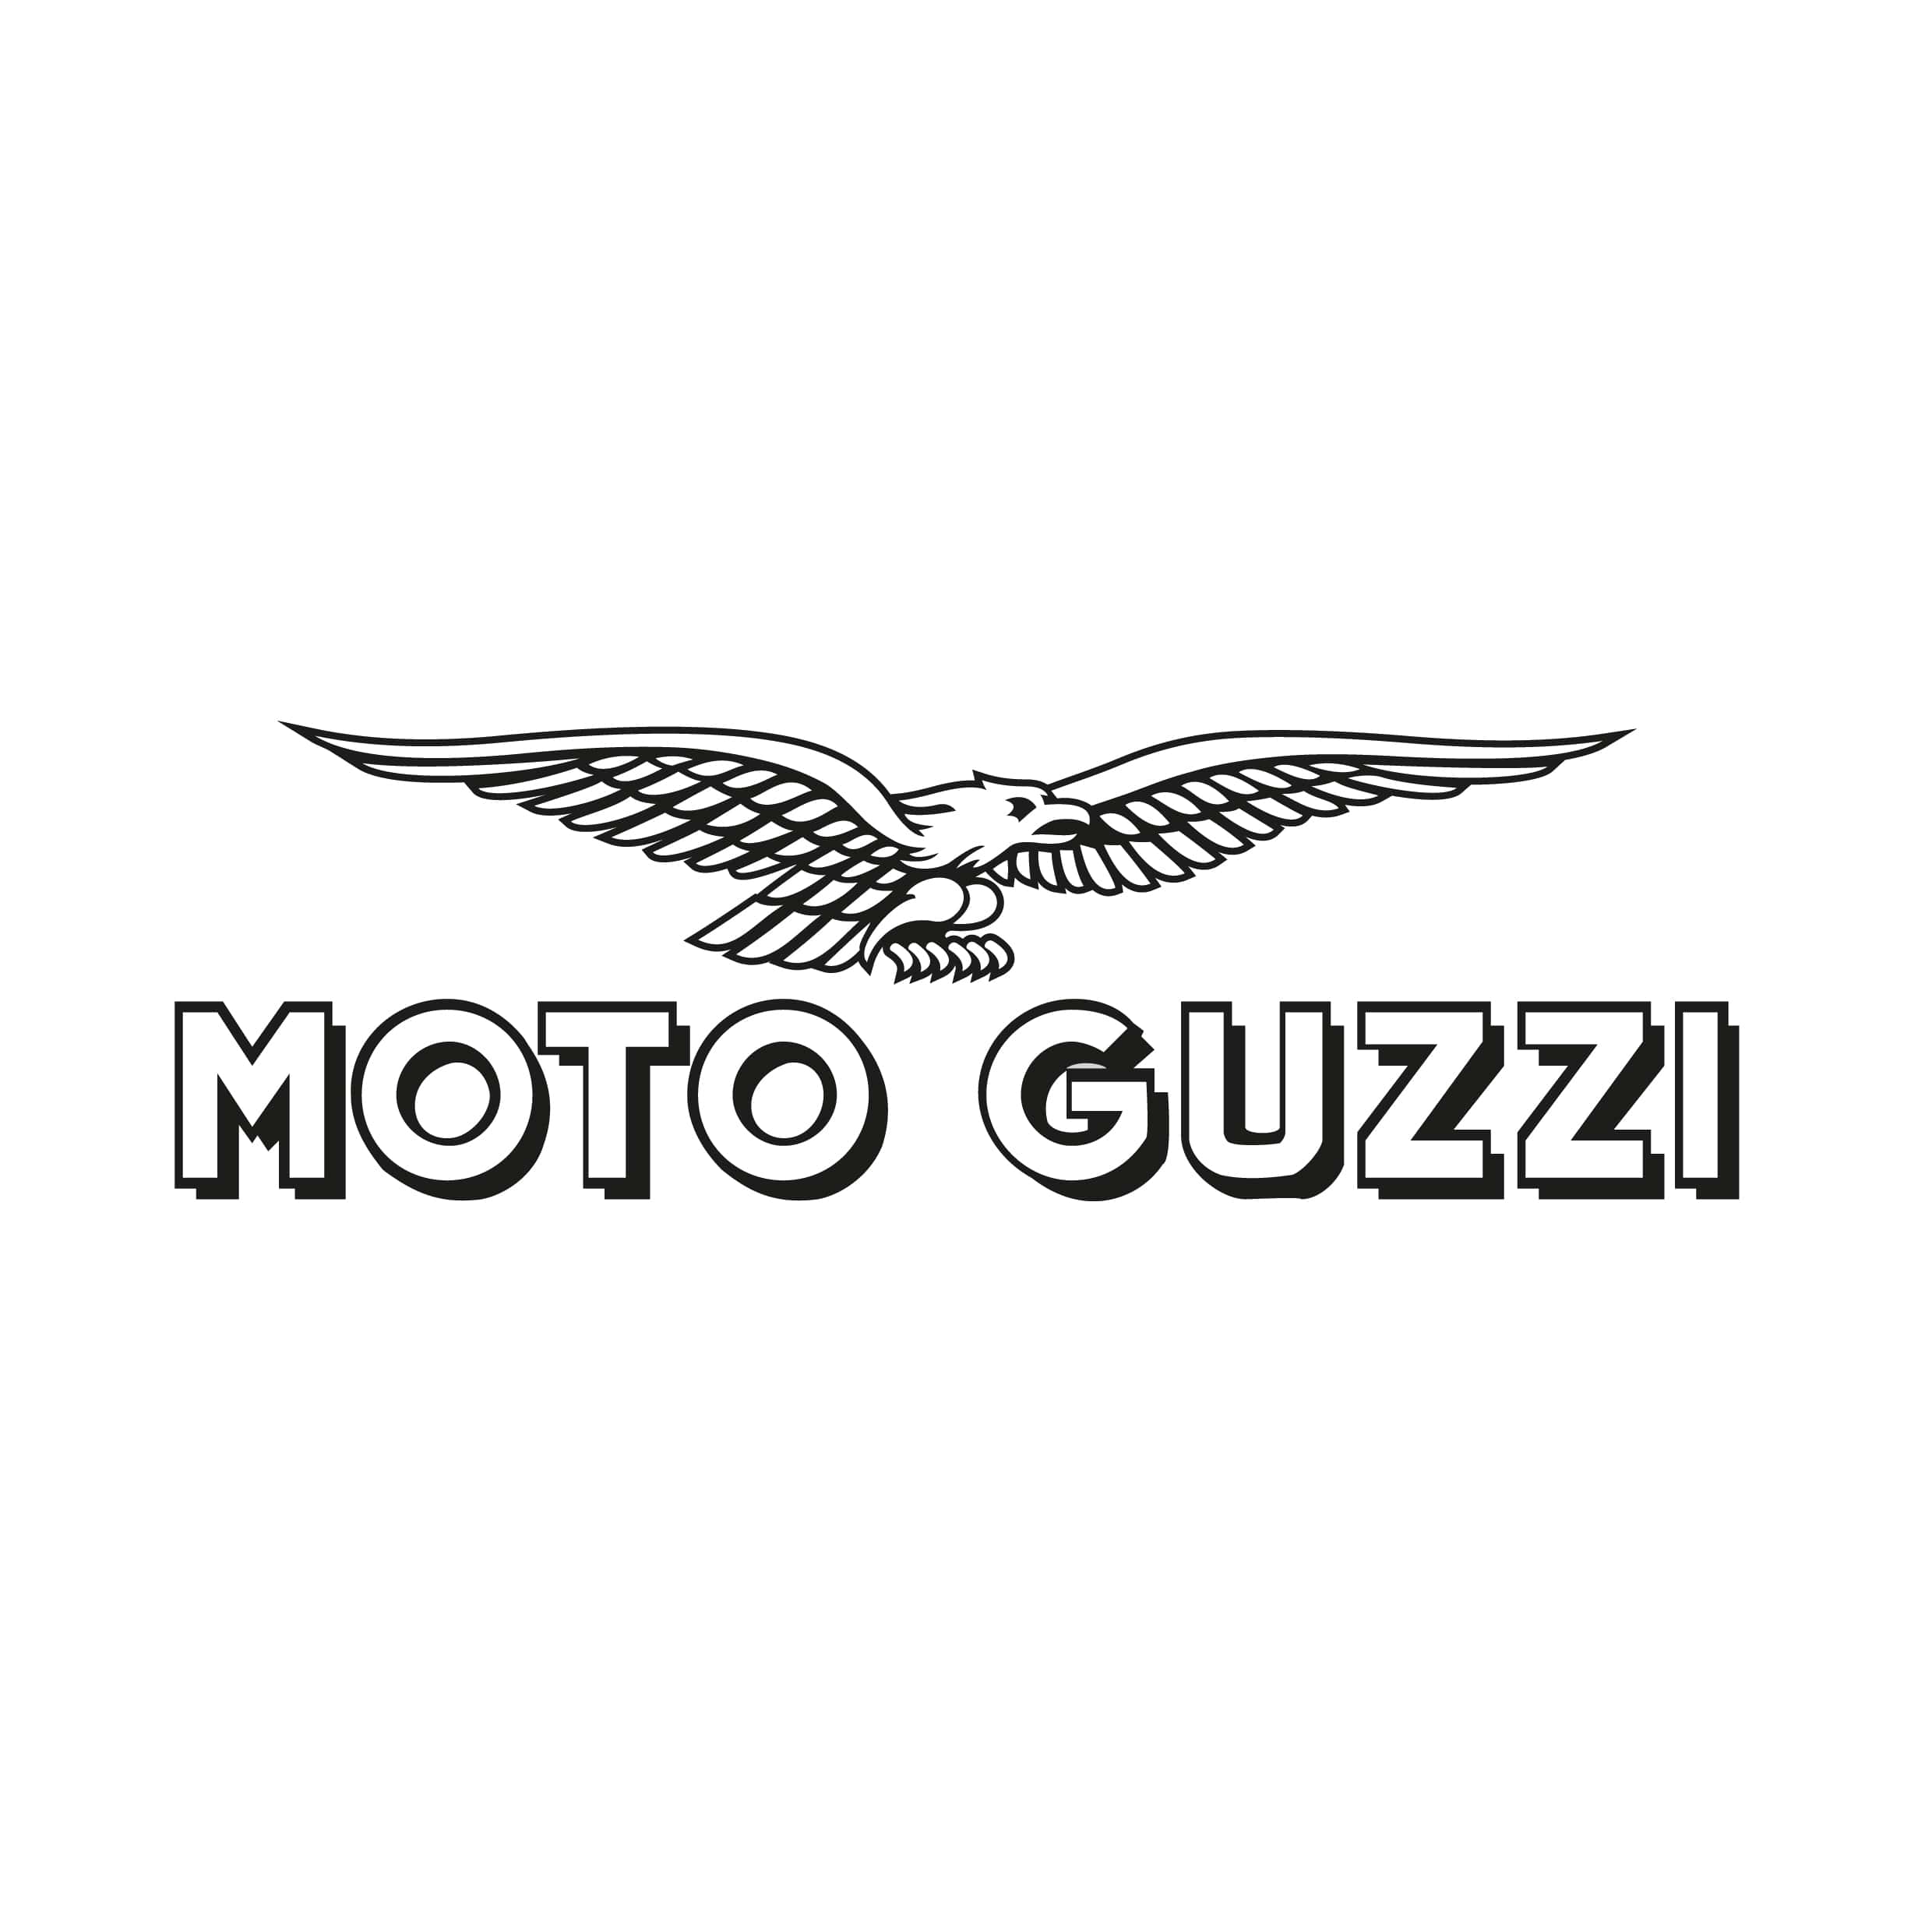 stickers-moto-guzzi-ref6-autocollant-moto-sticker-deux-roue-autocollants-decals-sponsors-tuning-sport-logo-bike-scooter-min